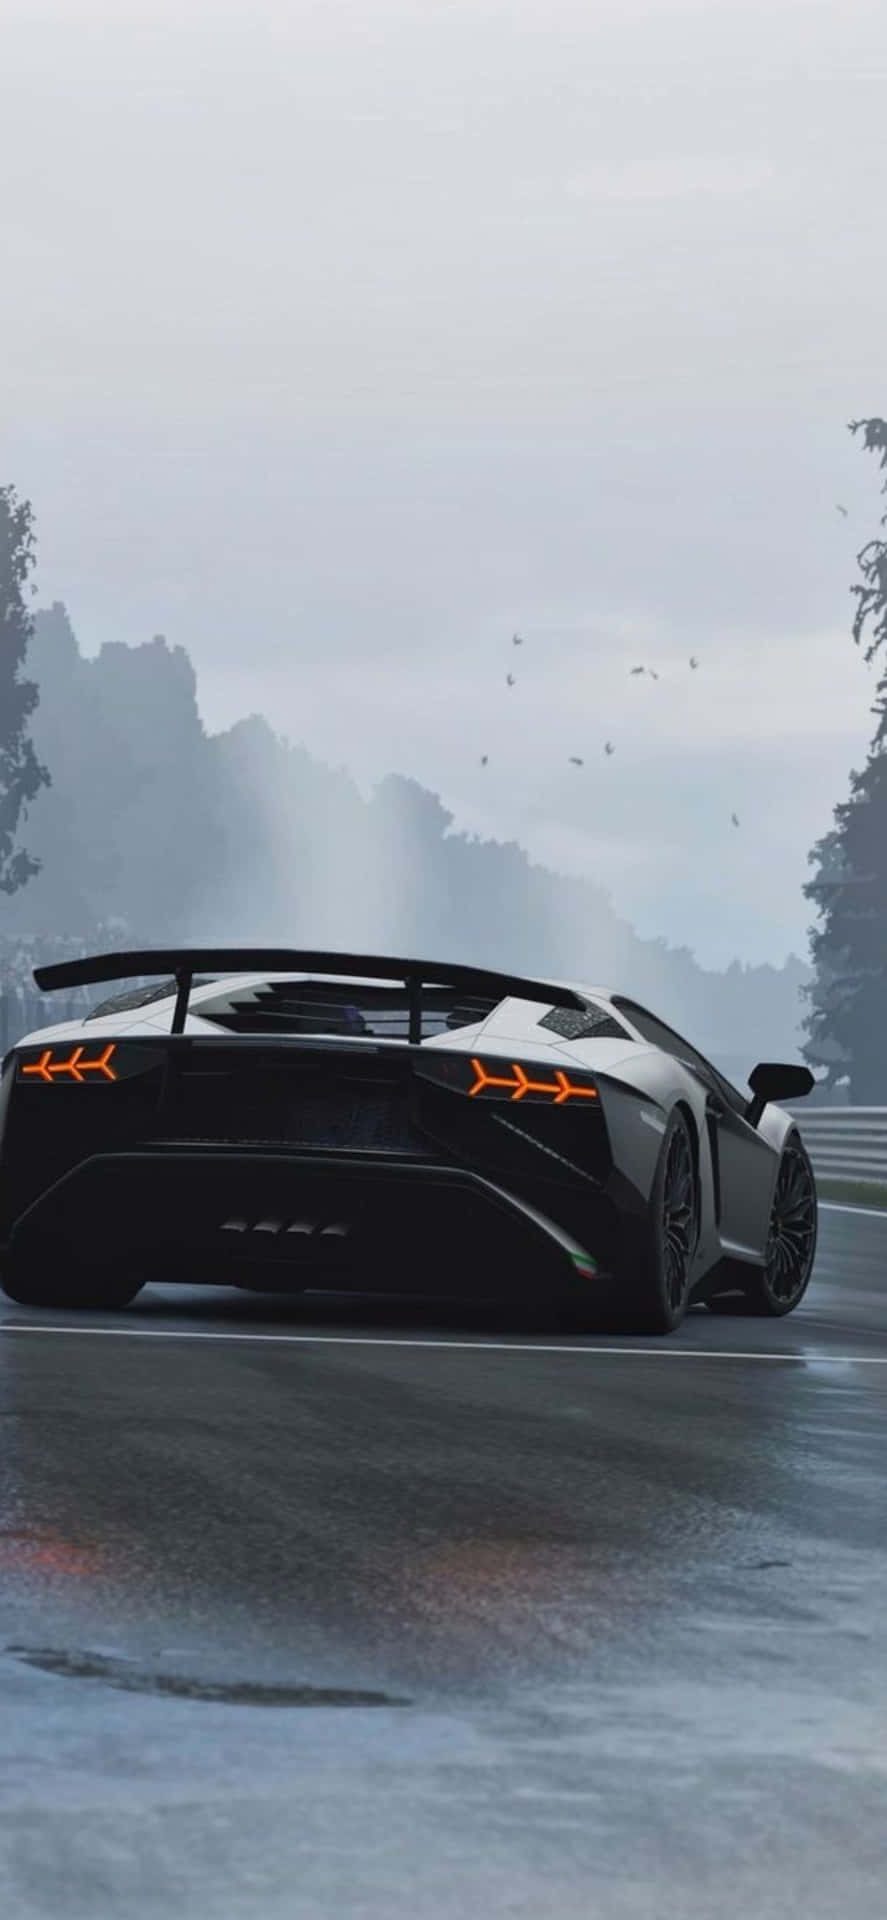 Iphonexs Max Lamborghini Aventador Svart Bakgrundsbild.